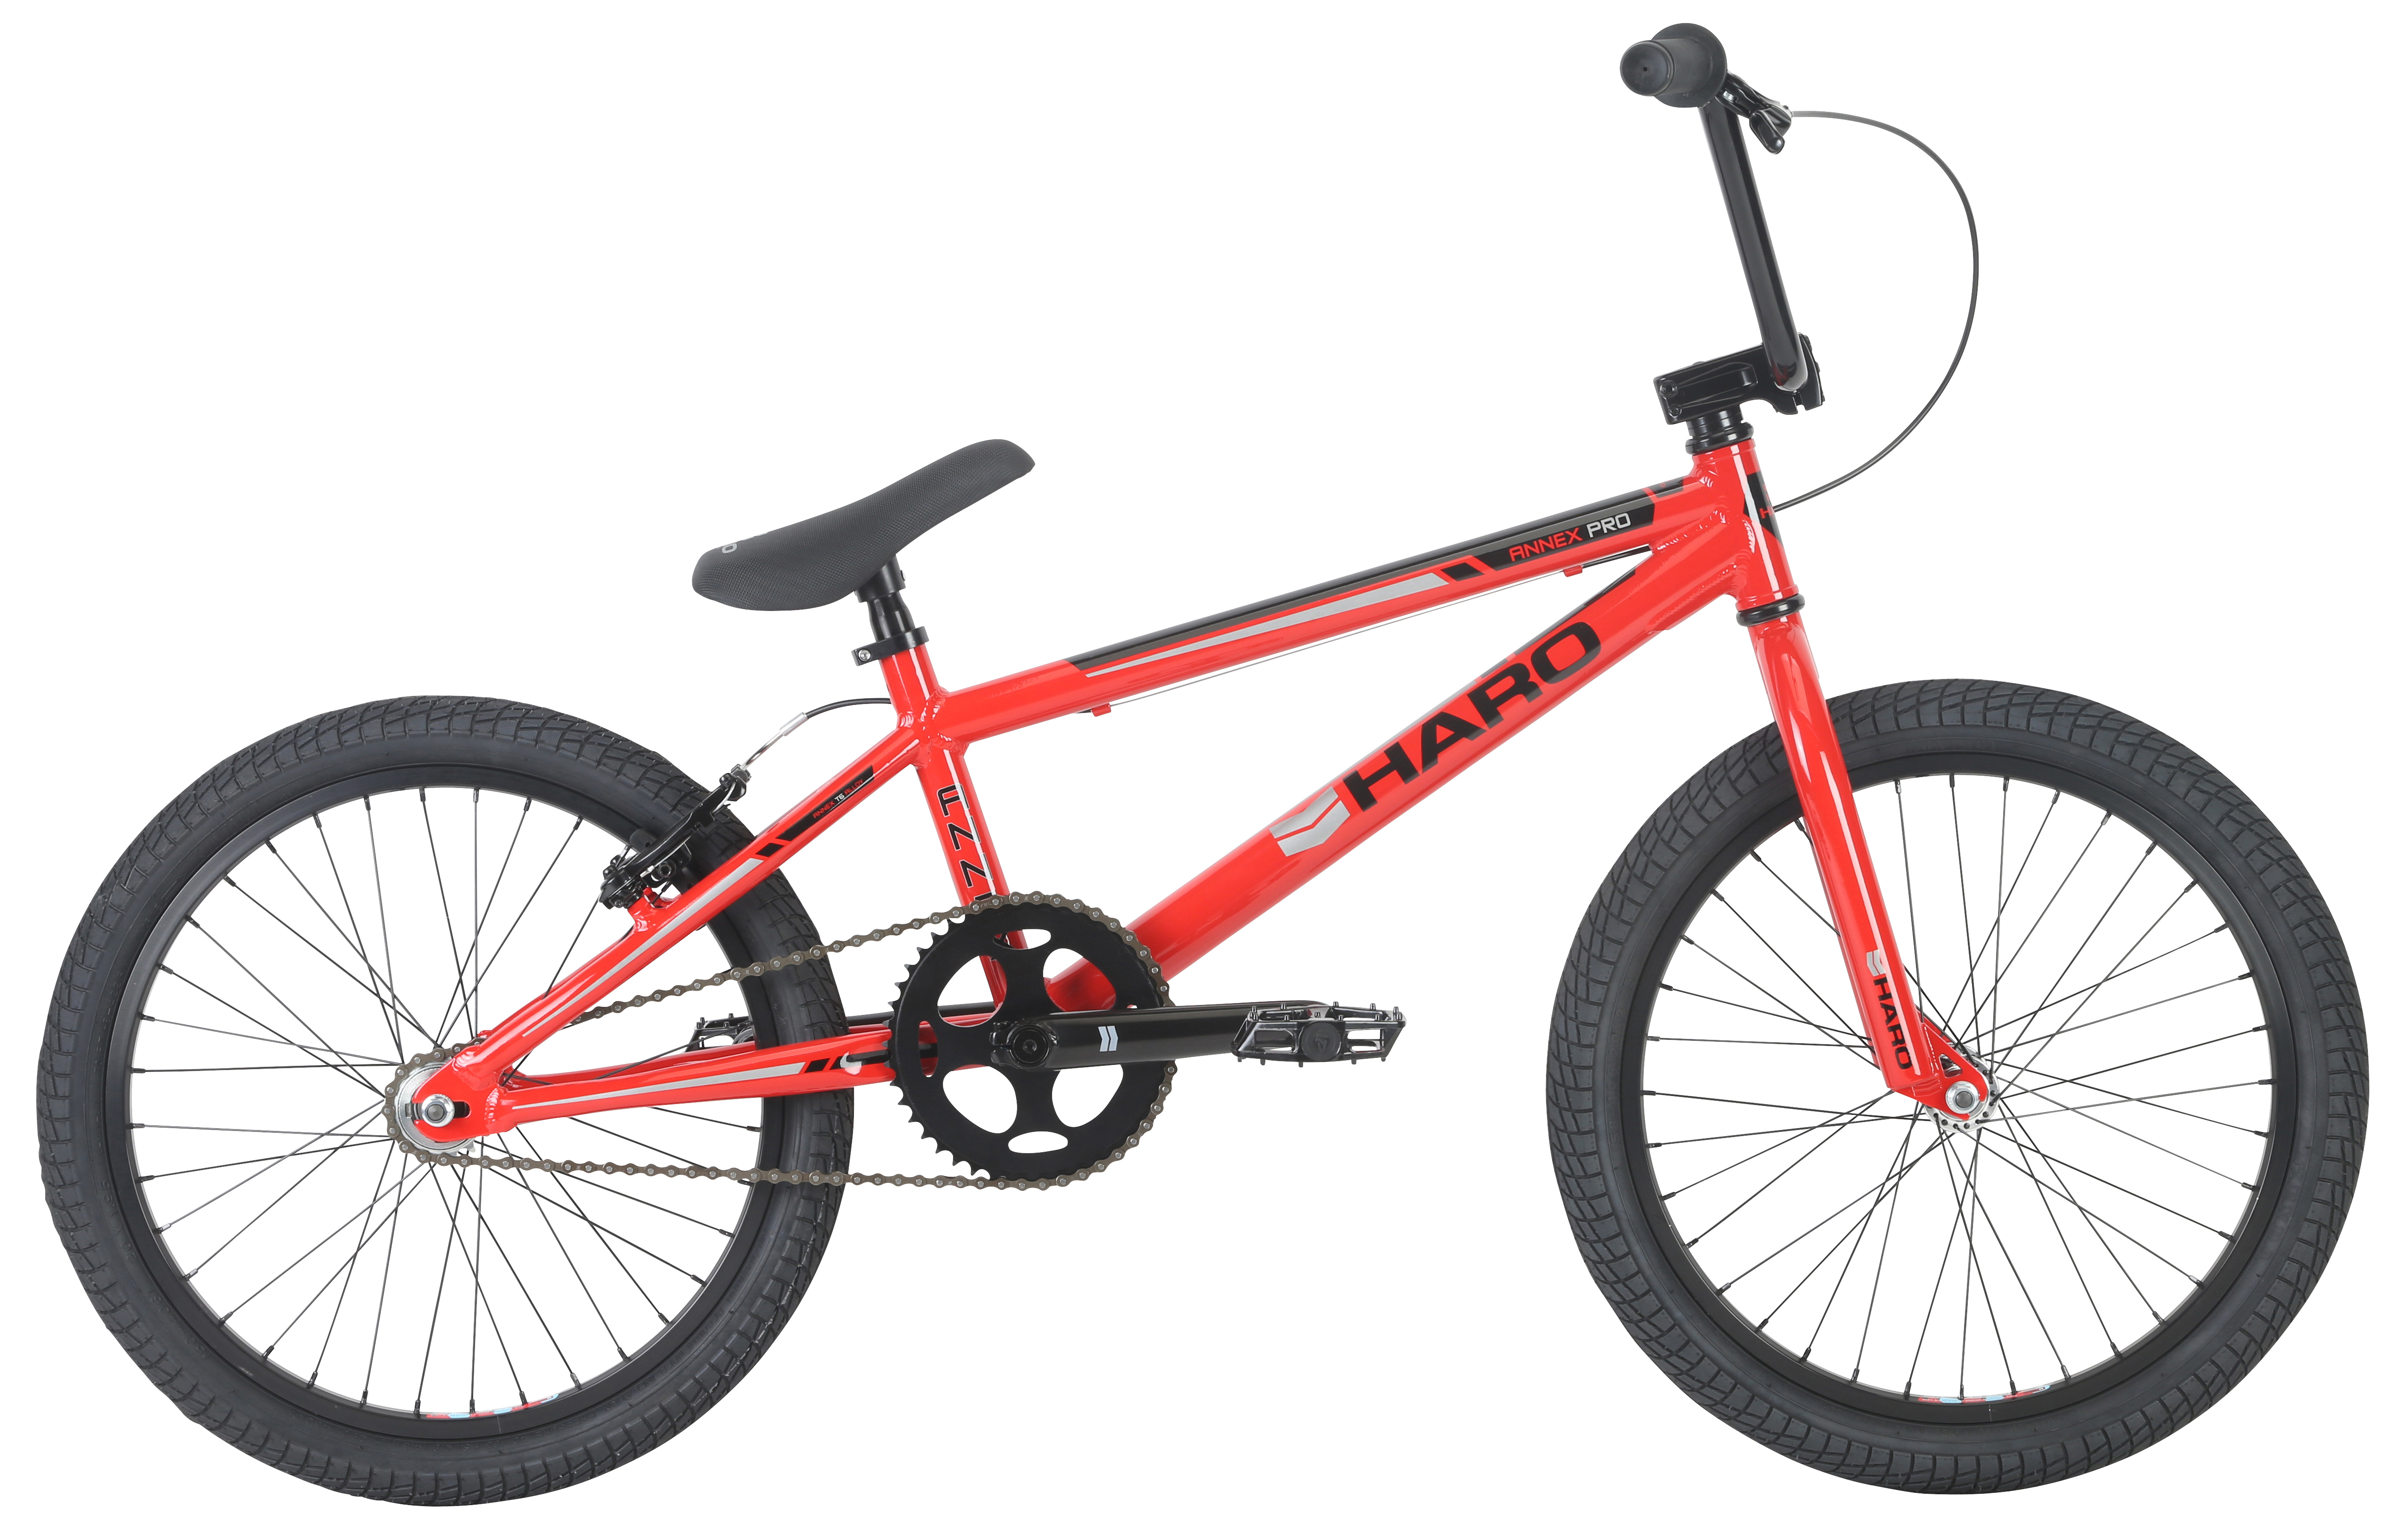  Отзывы о Велосипеде BMX Haro Annex Pro 2019